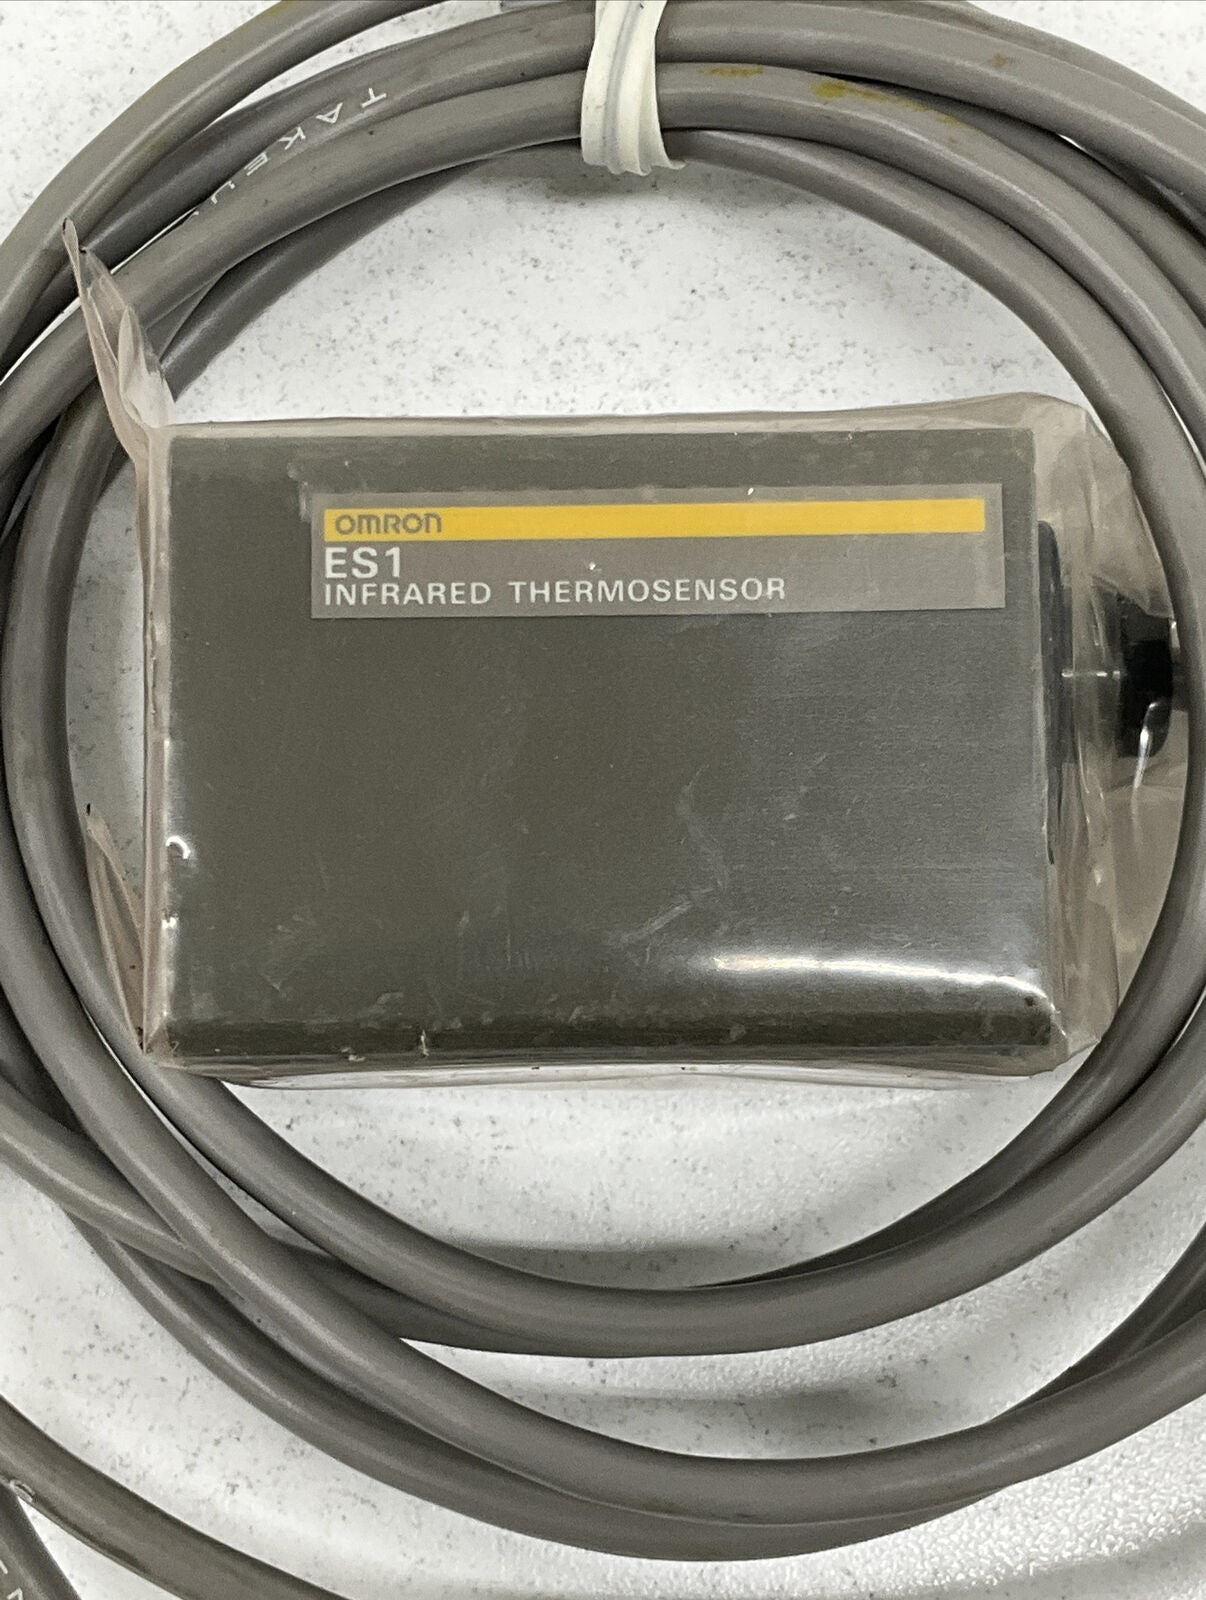 OMRON ES1-LP10 New Infared Thermosensor 0-500°C 12-24VDC (GR160) - 0